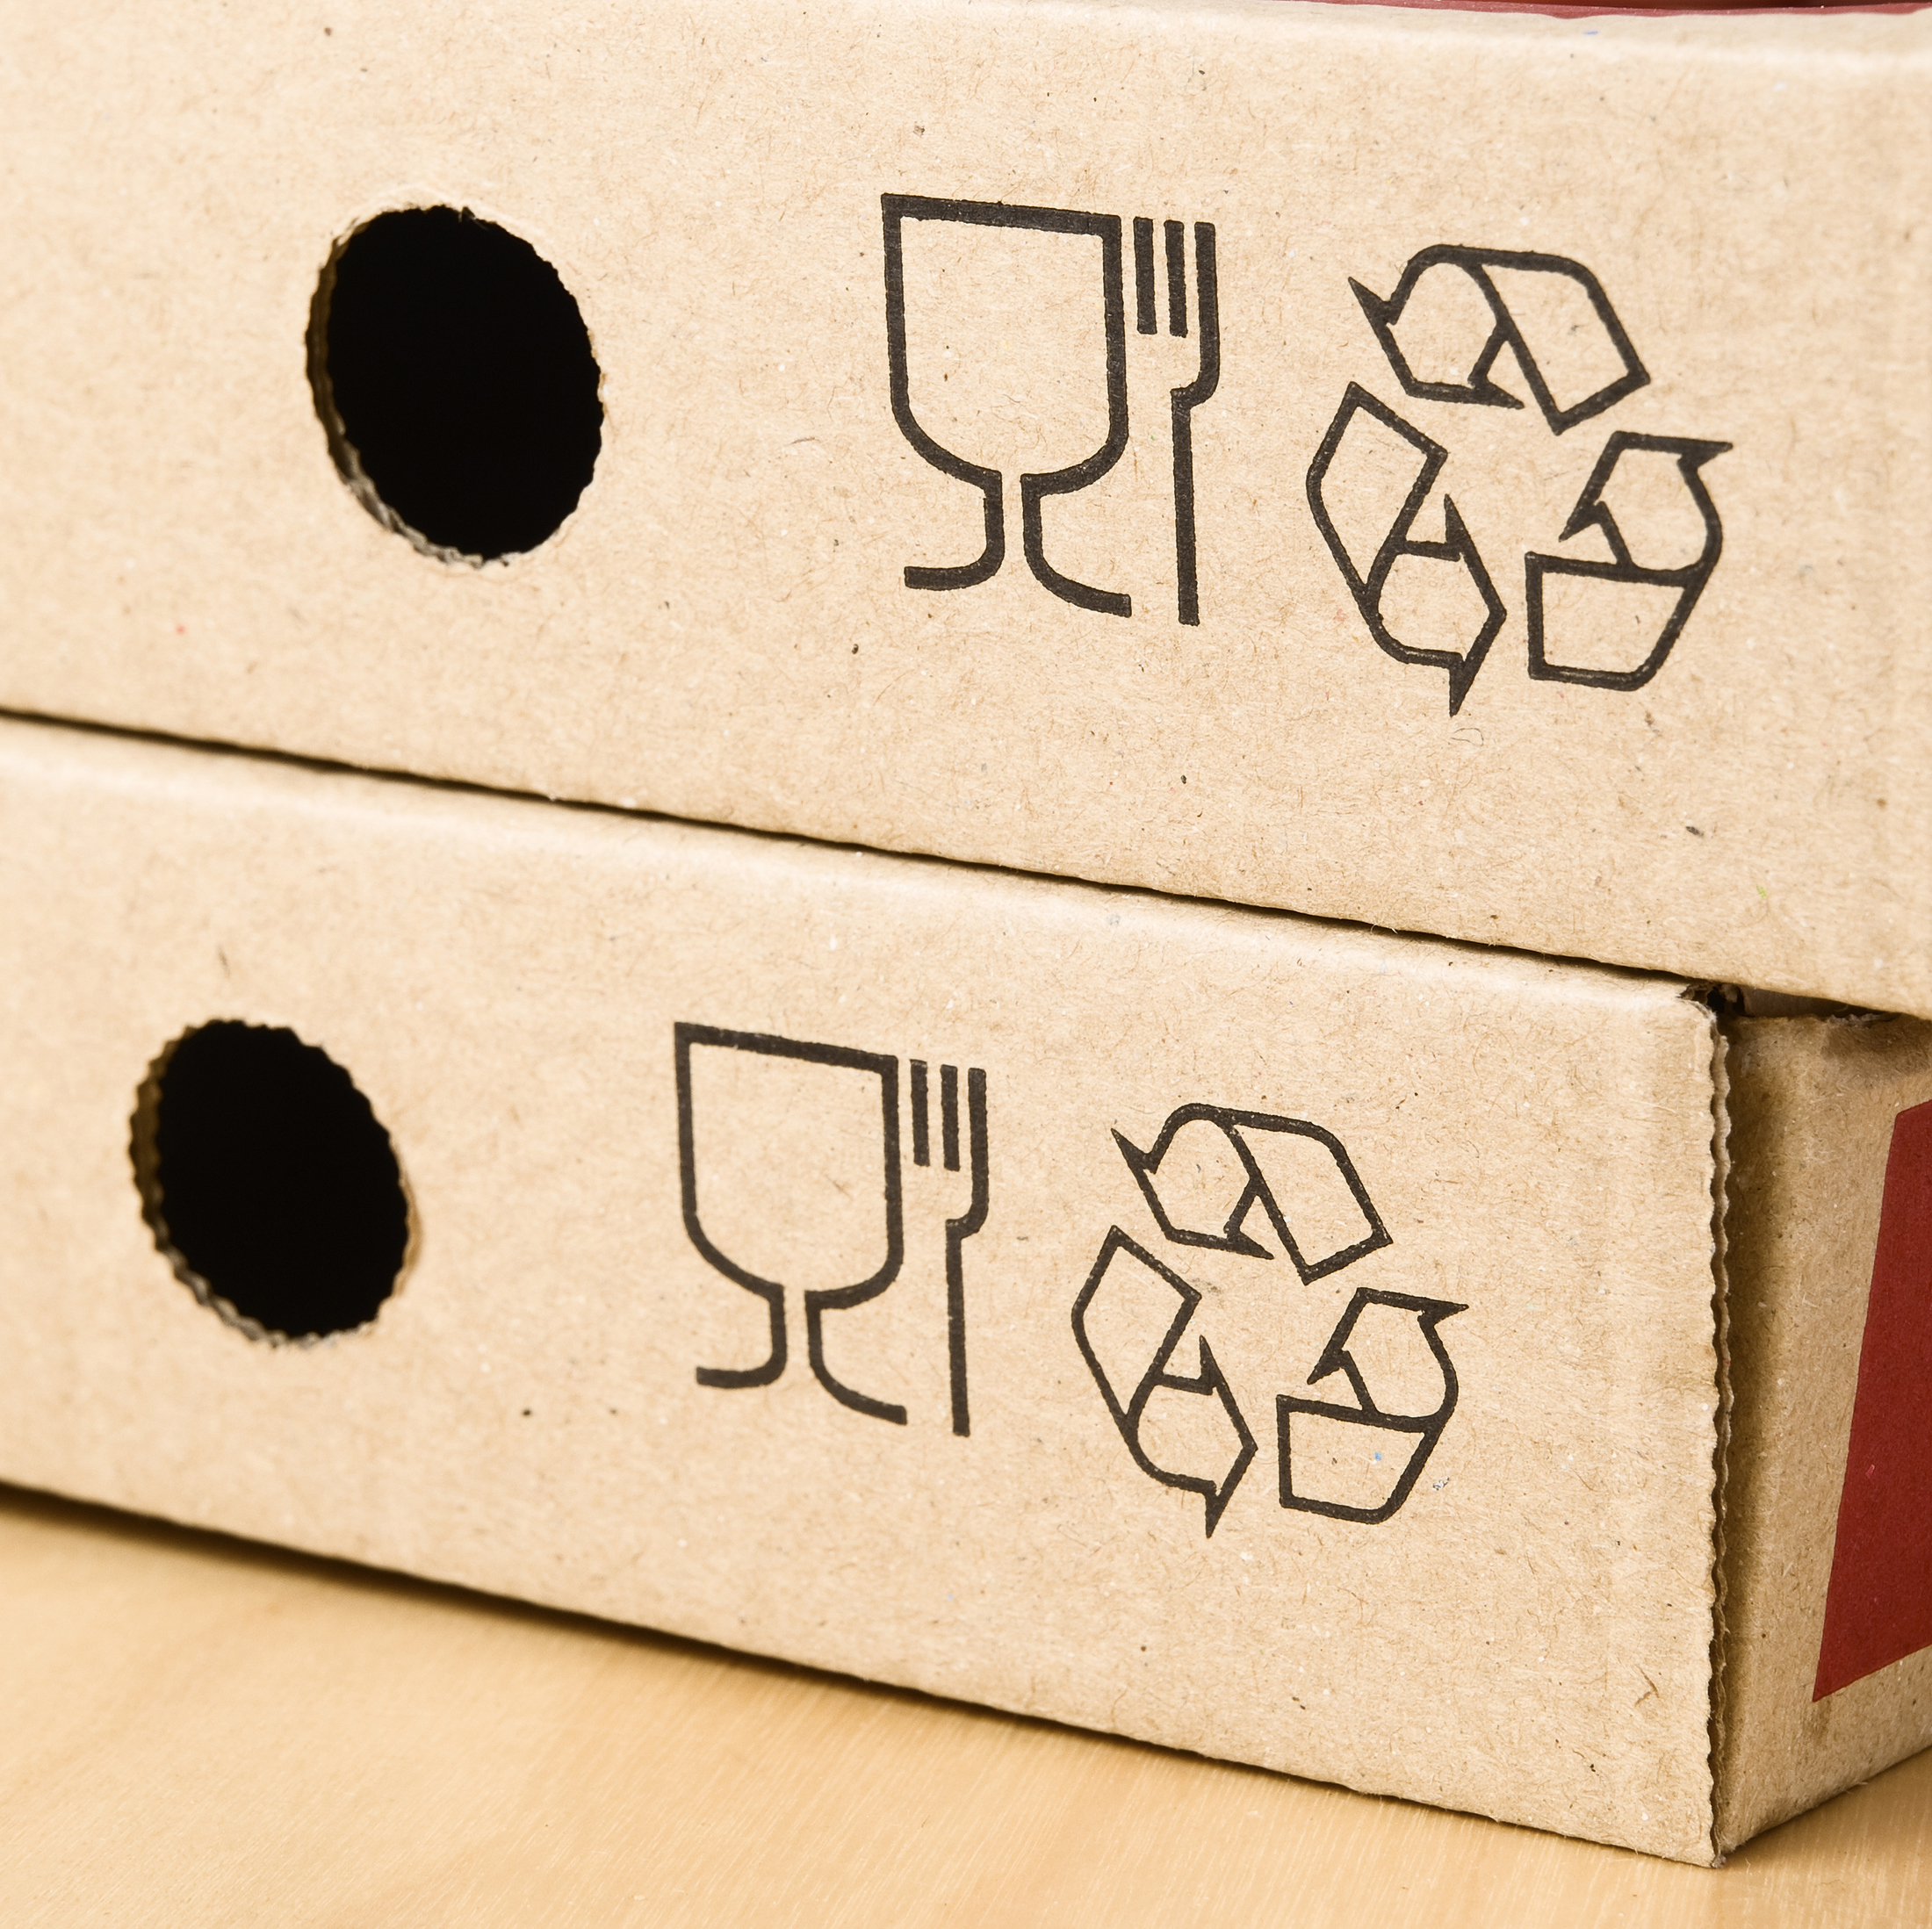 https://webcdn.beyond.ly/media/k1enfunt/packaging-with-recycle-symbol.jpg?v=1d9420864a86770